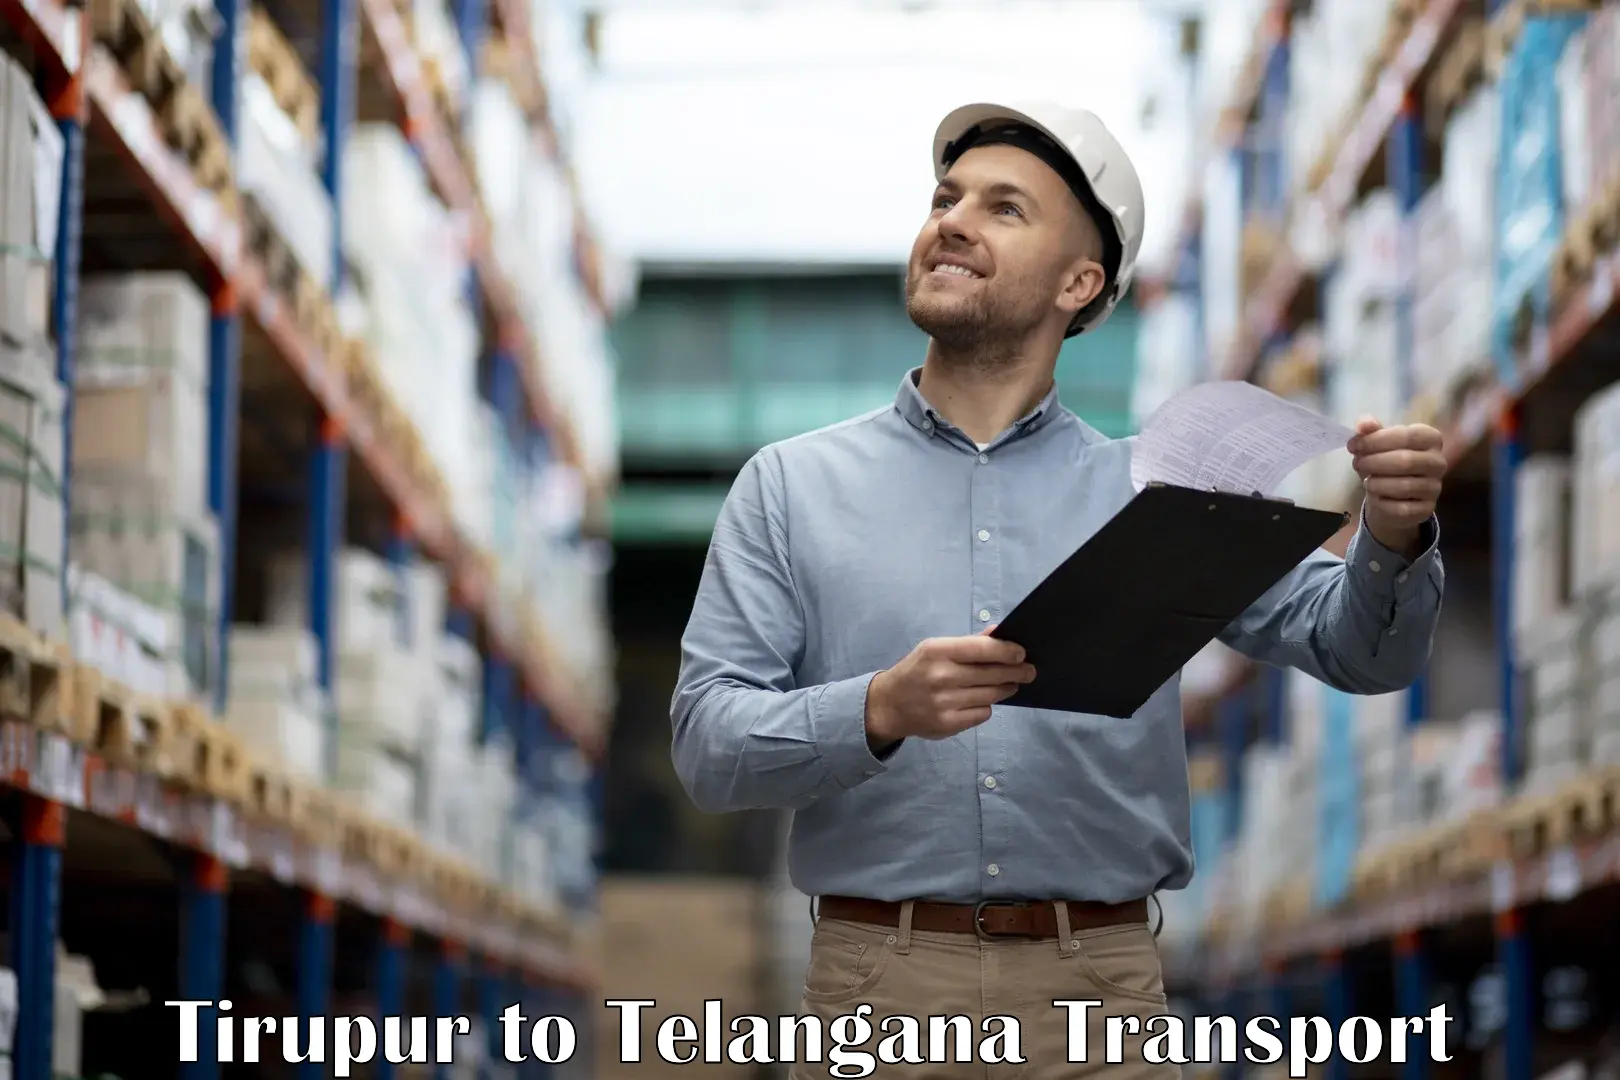 Shipping partner Tirupur to Wanaparthy